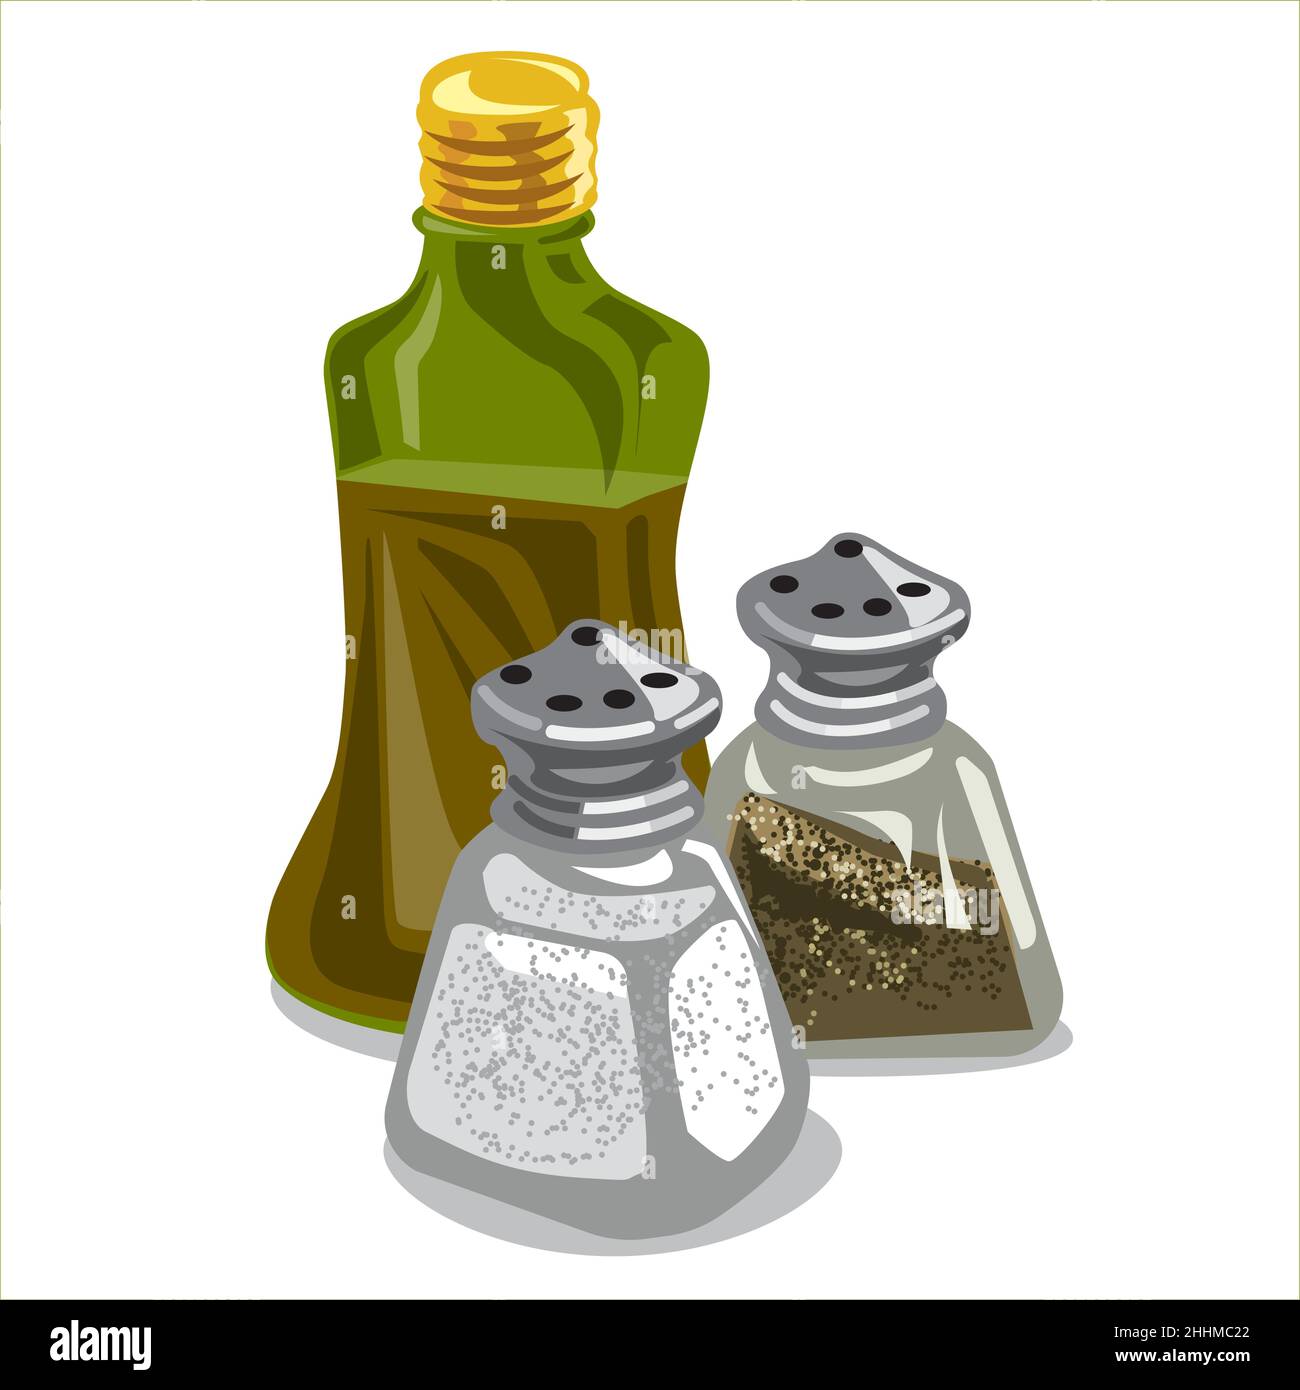 olive oil bottle with salt and pepper shakers illustration Stock Vector